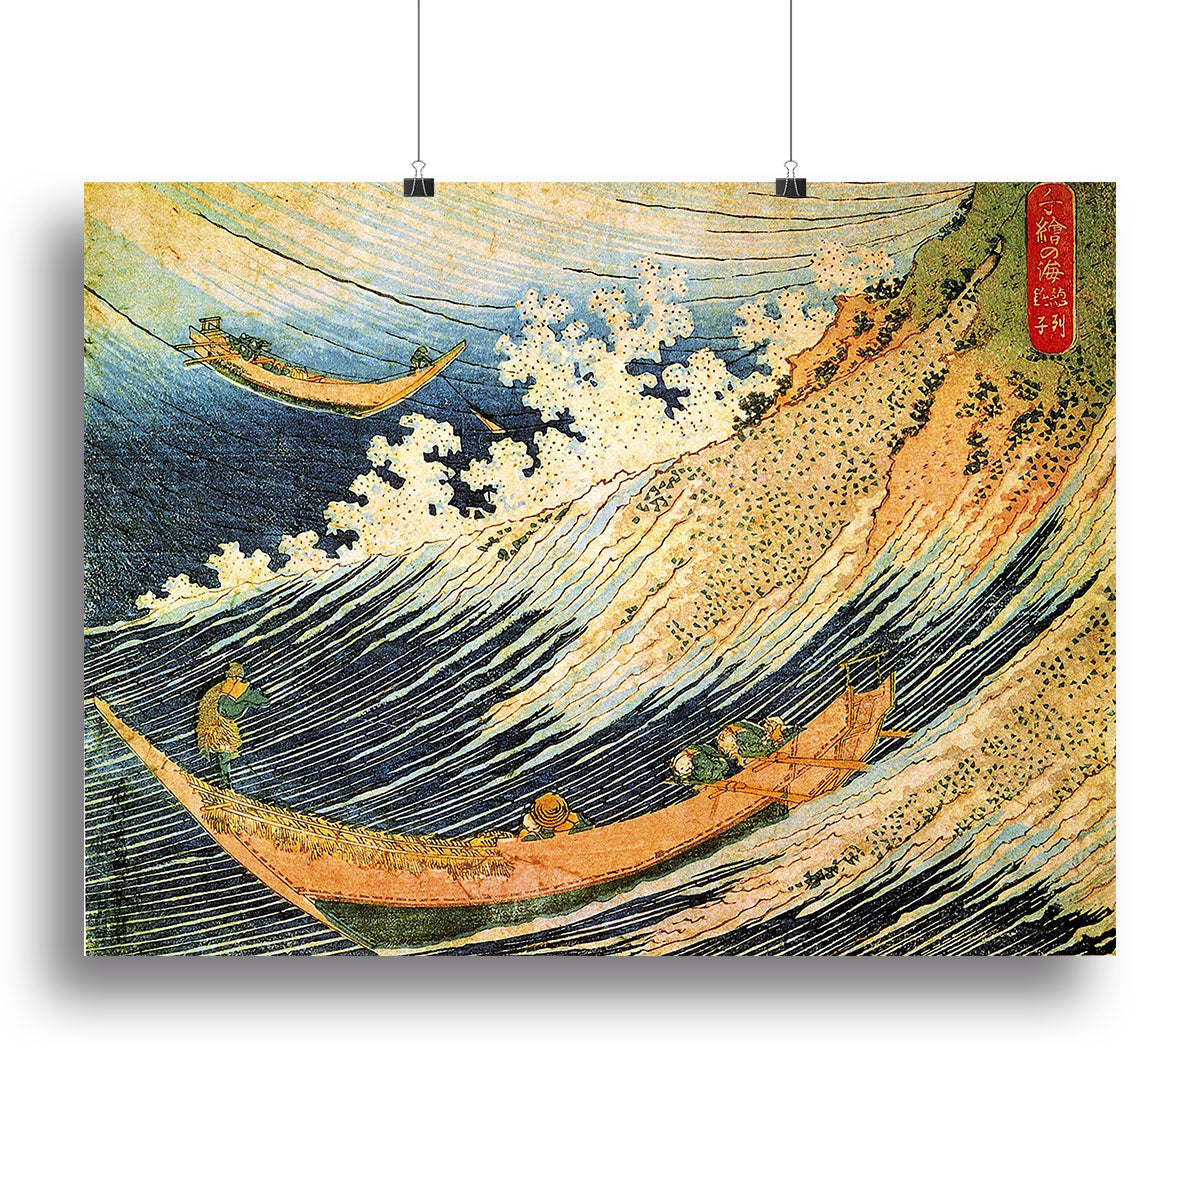 Ocean landscape 2 by Hokusai Canvas Print or Poster - Canvas Art Rocks - 2